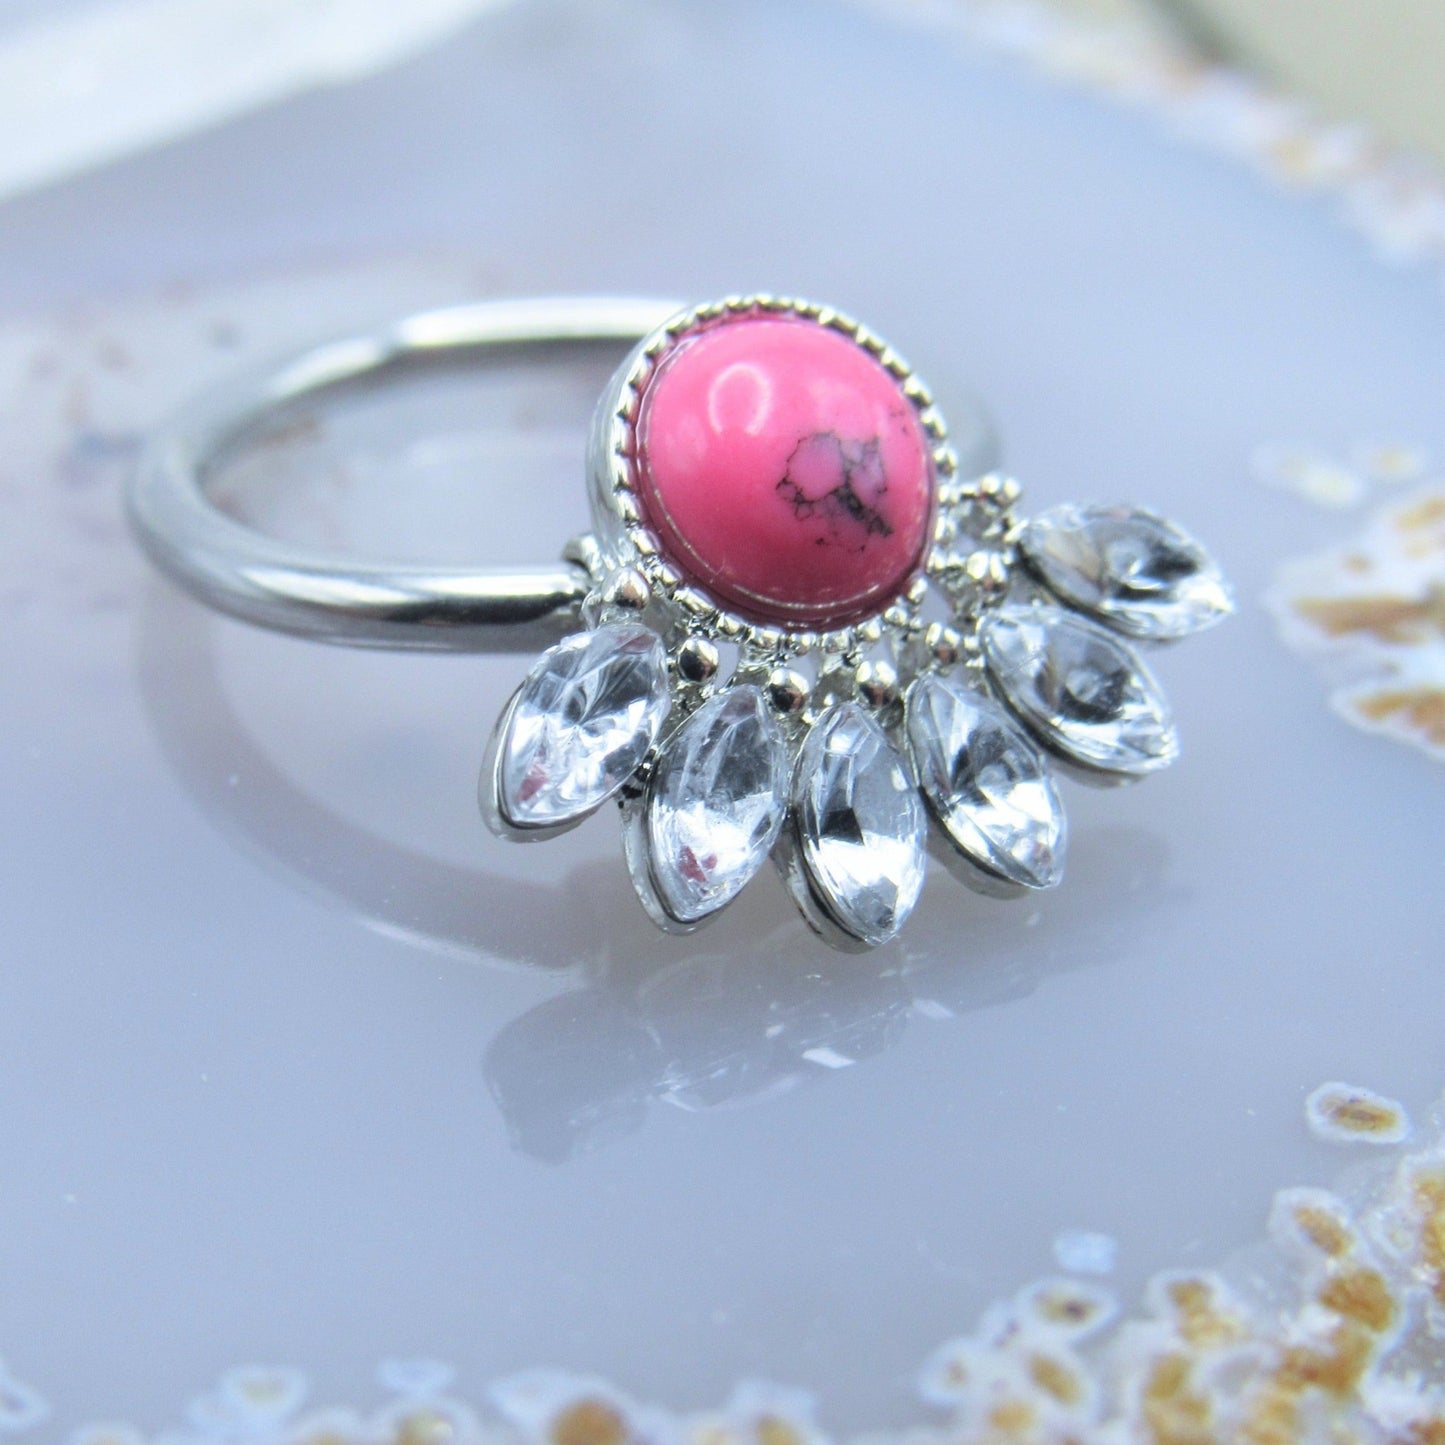 Decorative captive bead ring hoop 14g 1/2" press fit cz gemstones pink howlite stone conch ear piercing ring - Siren Body Jewelry